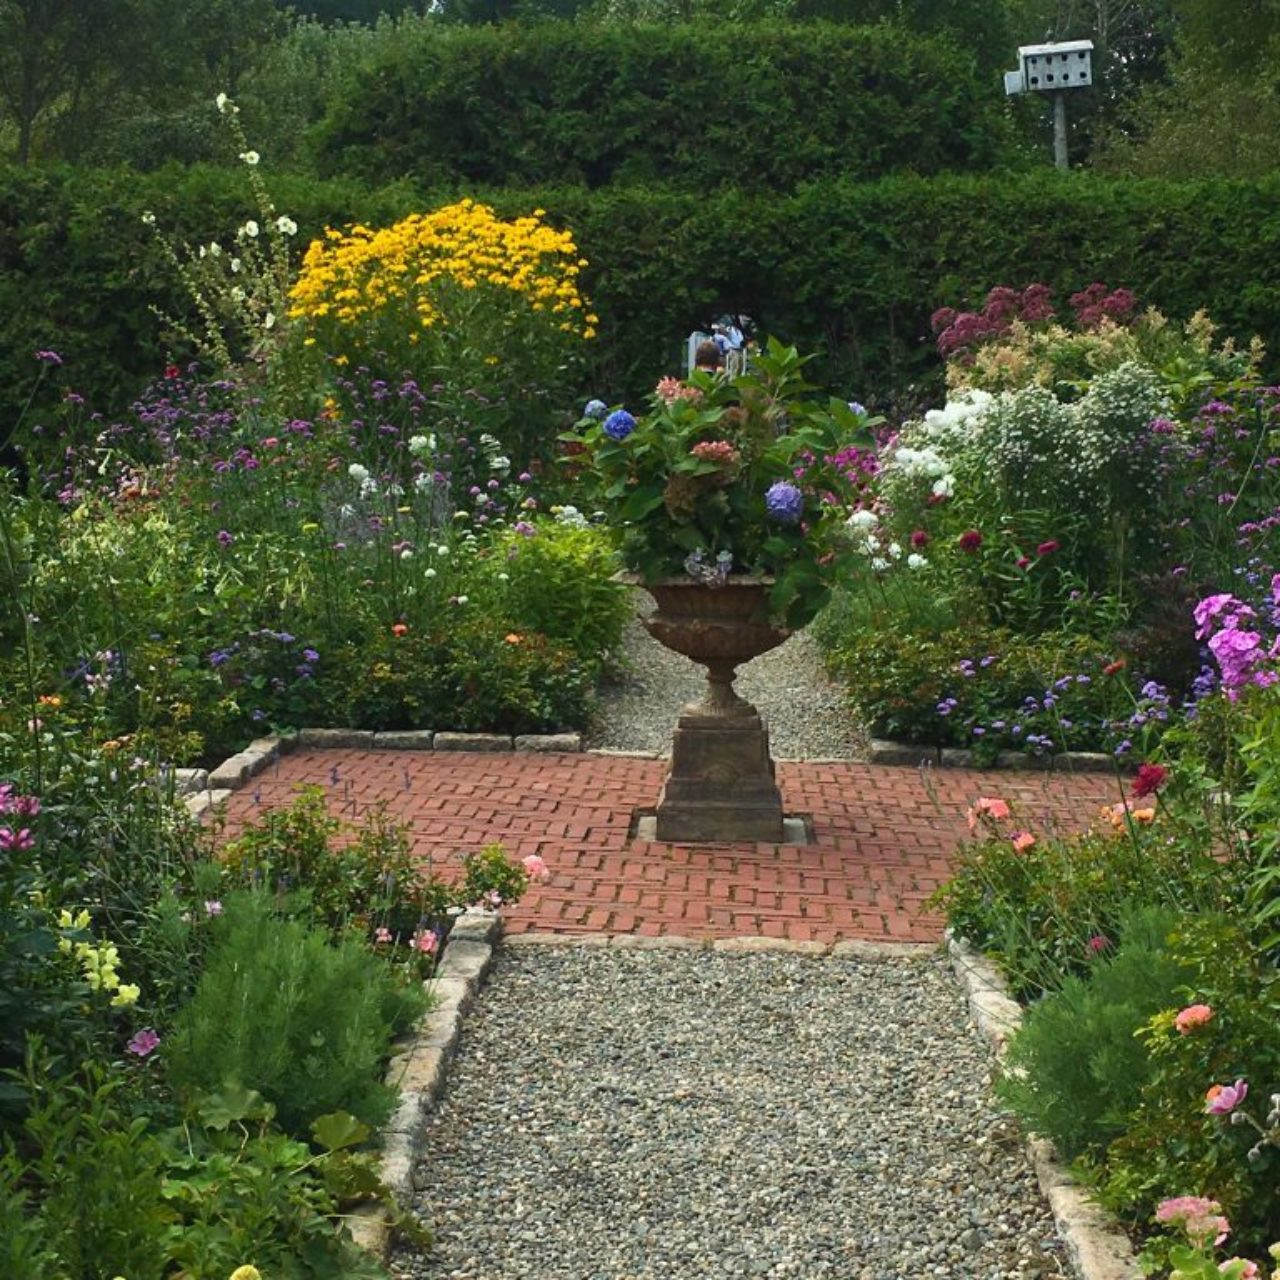 The Beatrix Farrand designed gardens at The Farm House